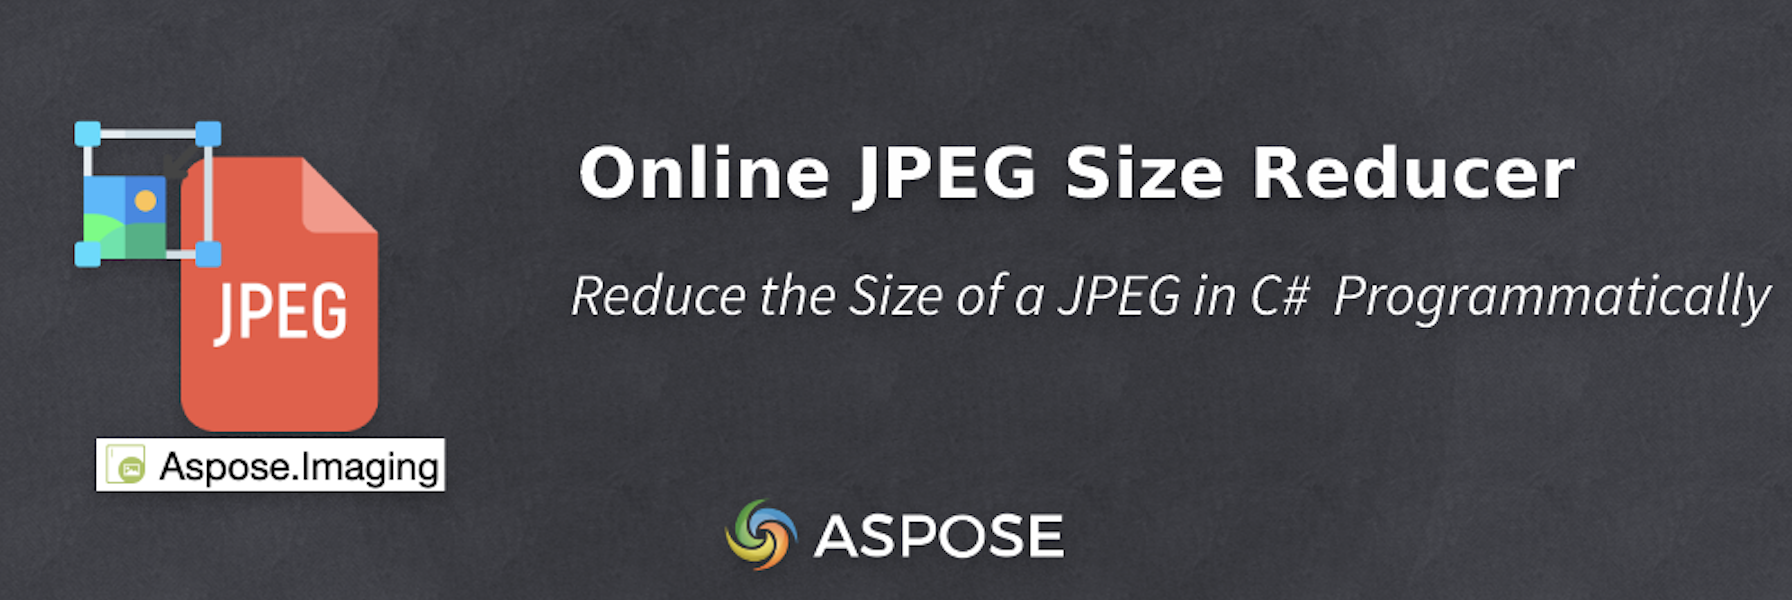 Minska storleken på en JPEG i C# - Online JPEG Size Reducer